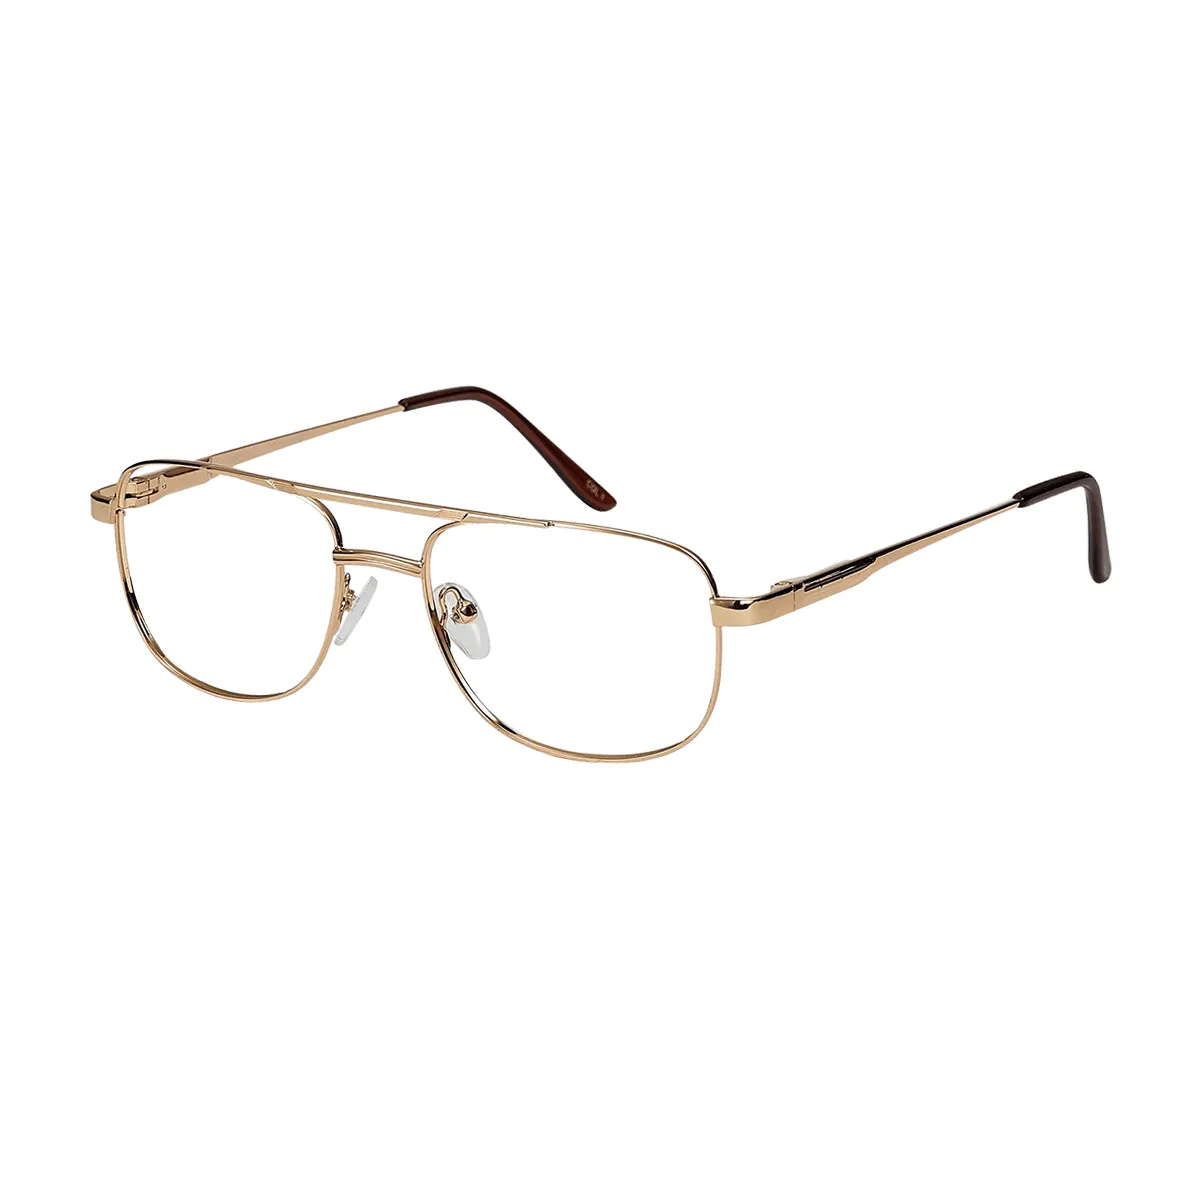 Manuel - Aviator Gold Glasses for Men - EFE